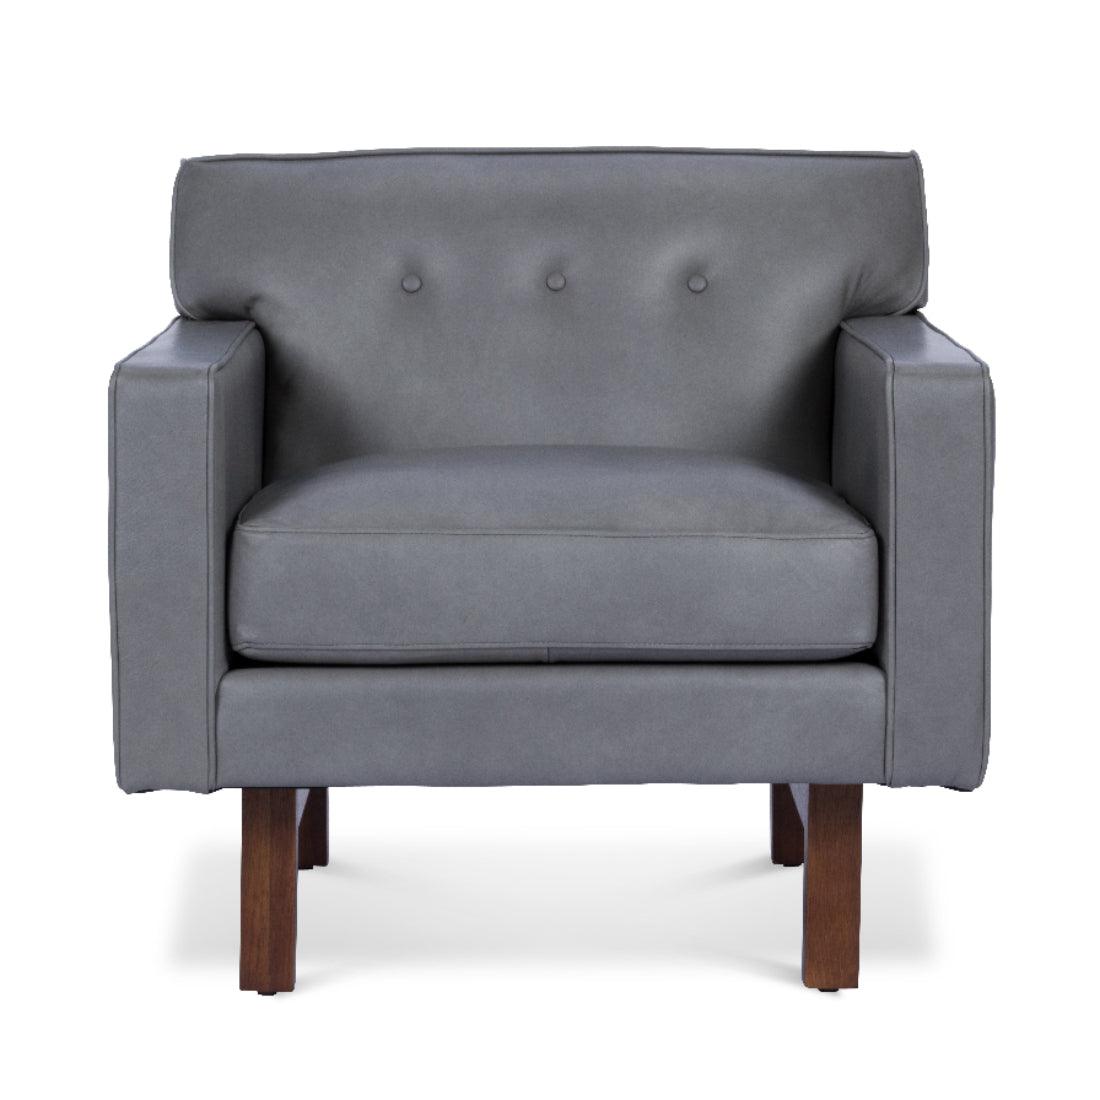 Midcentury Rehder Top Grain Leather Club Chair for Living Room - Uptown Sebastian